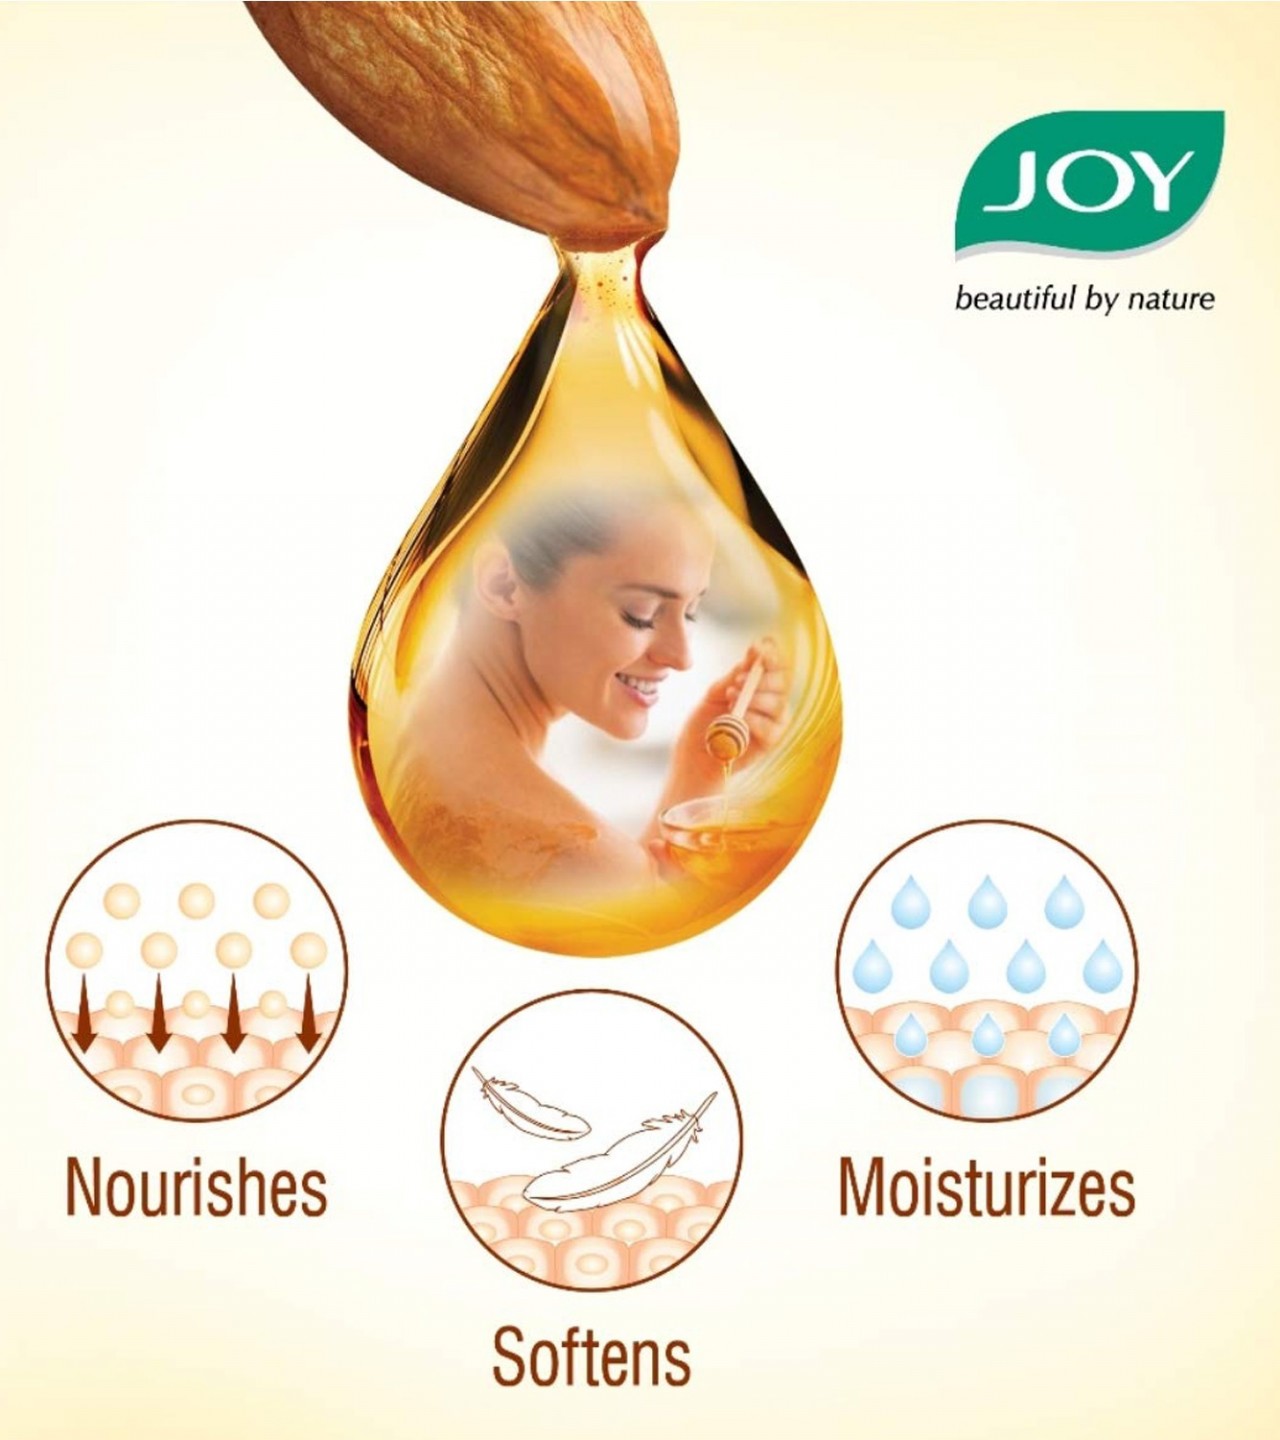 Joy Honey & Almonds Nourishing Body Lotion - 300 ml